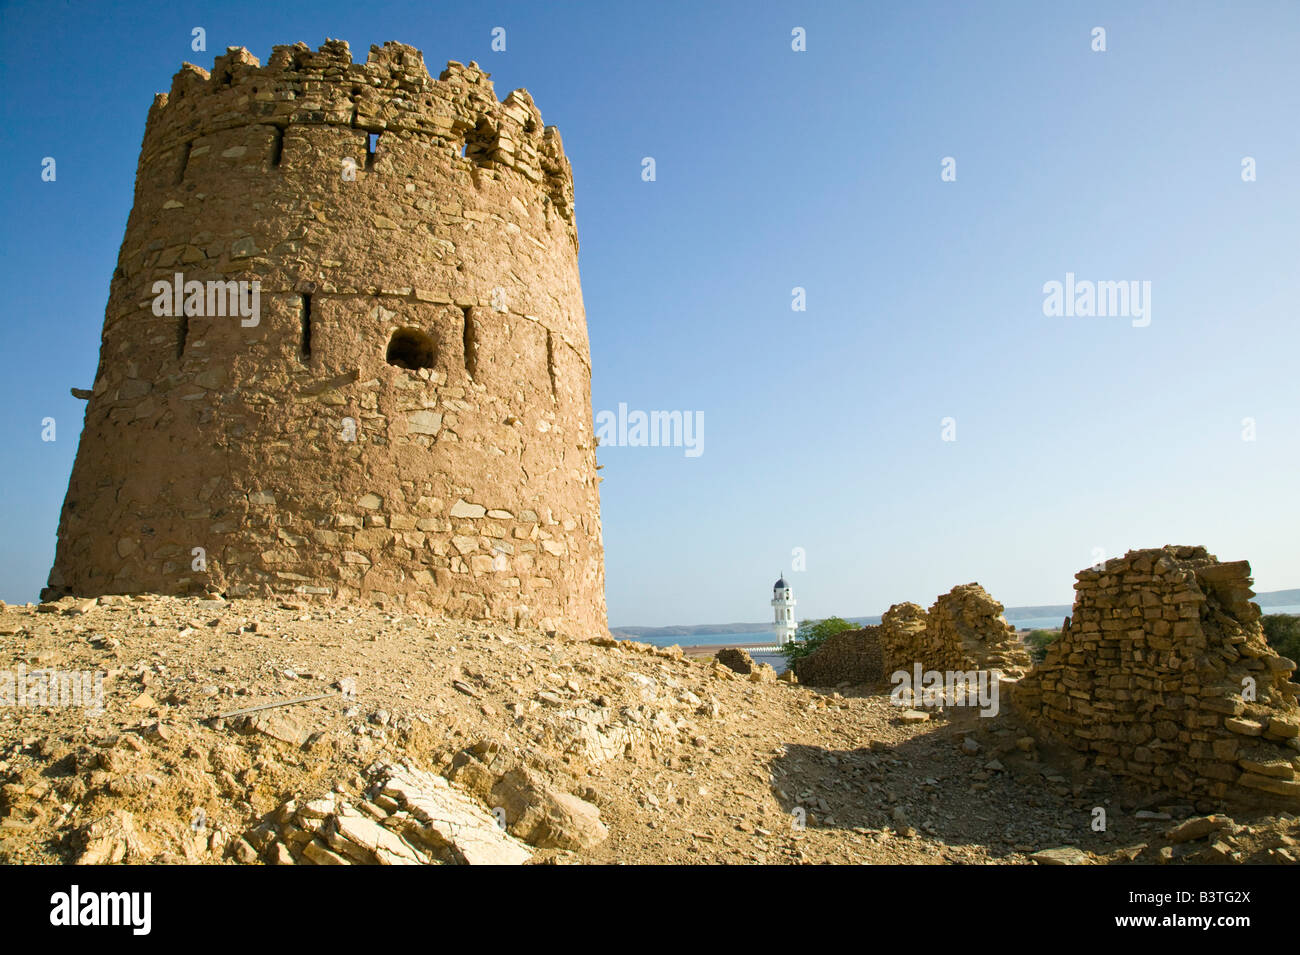 Oman, Sharqiya Region, Ras Al Hadd Bereich. Dorf Wachturm Stockfoto